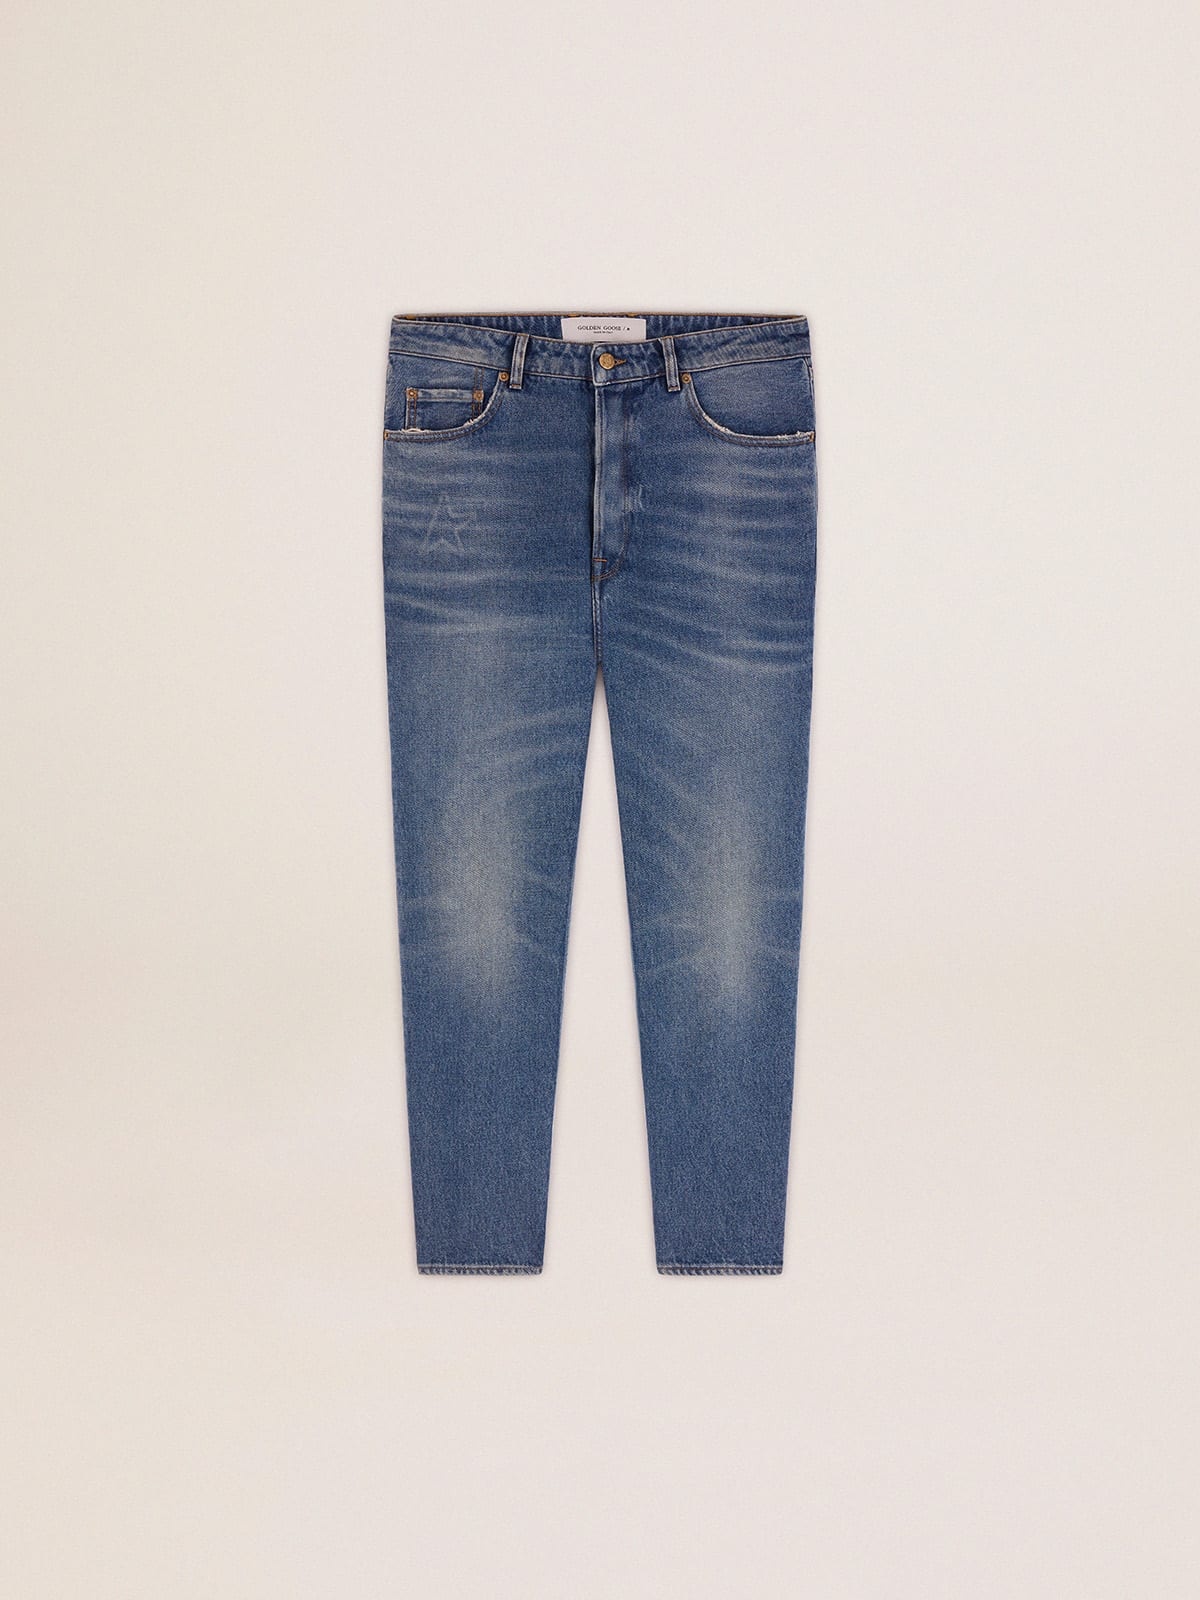 Men's slim fit jeans with medium wash - 1